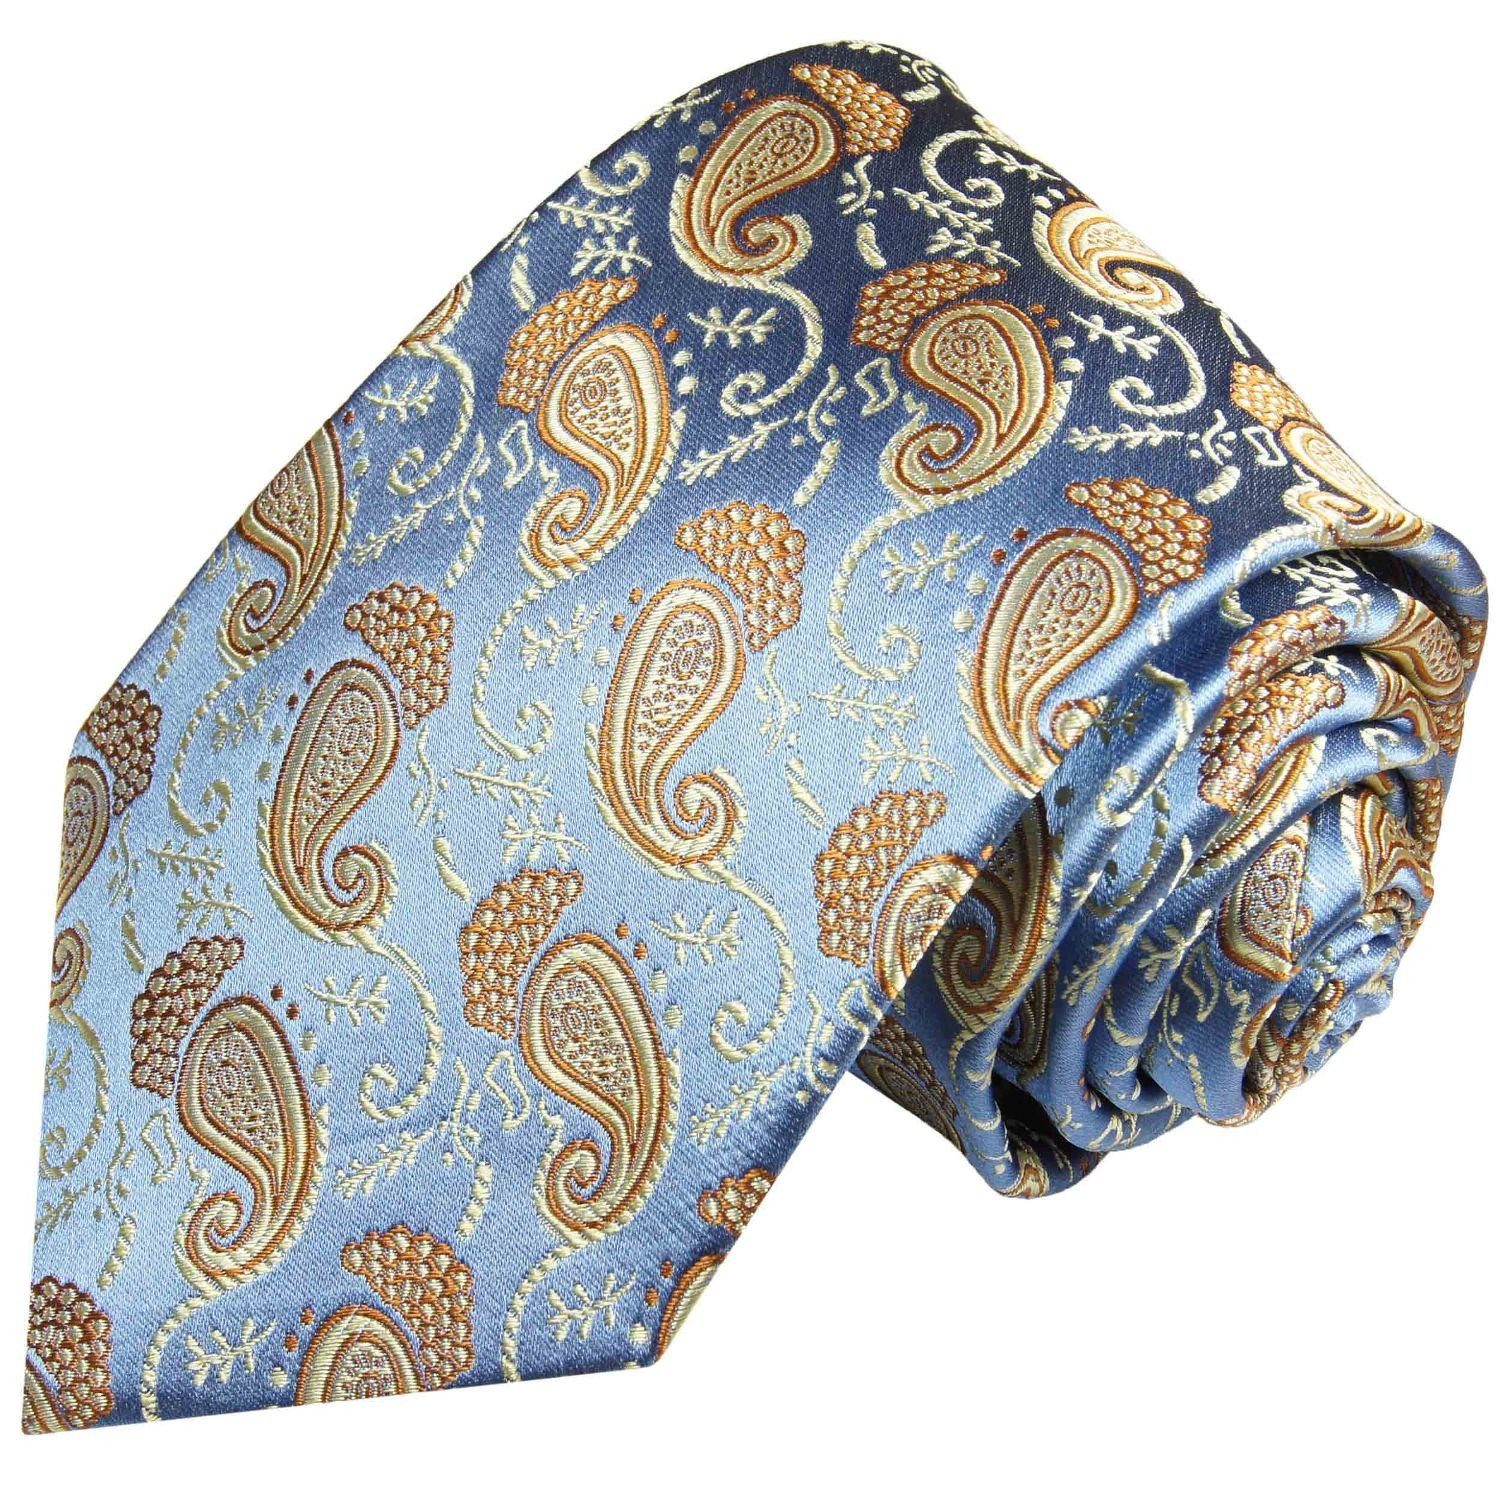 neu angekommen Paul Malone Krawatte blau Seide paisley 351 Herren (8cm), Seidenkrawatte 100% Elegante Breit brokat Schlips gold